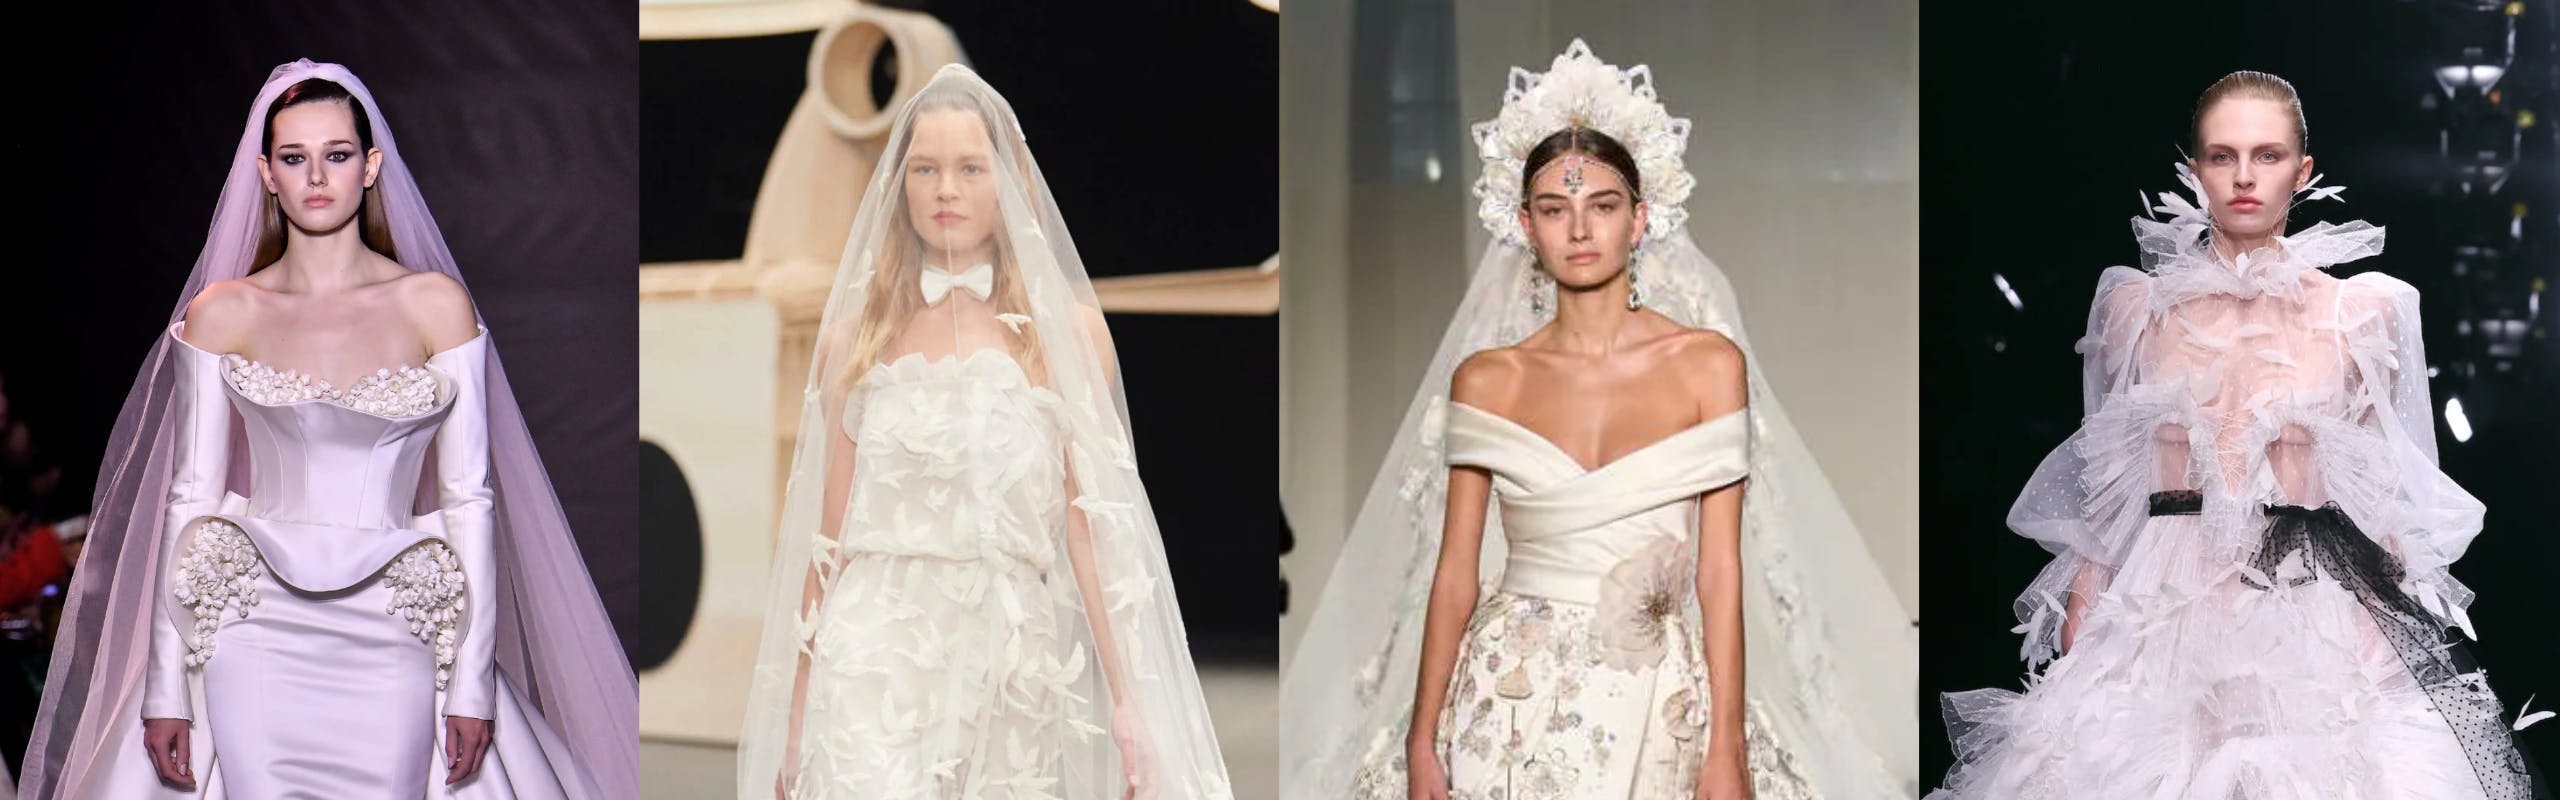 wedding dresses paris haute couture